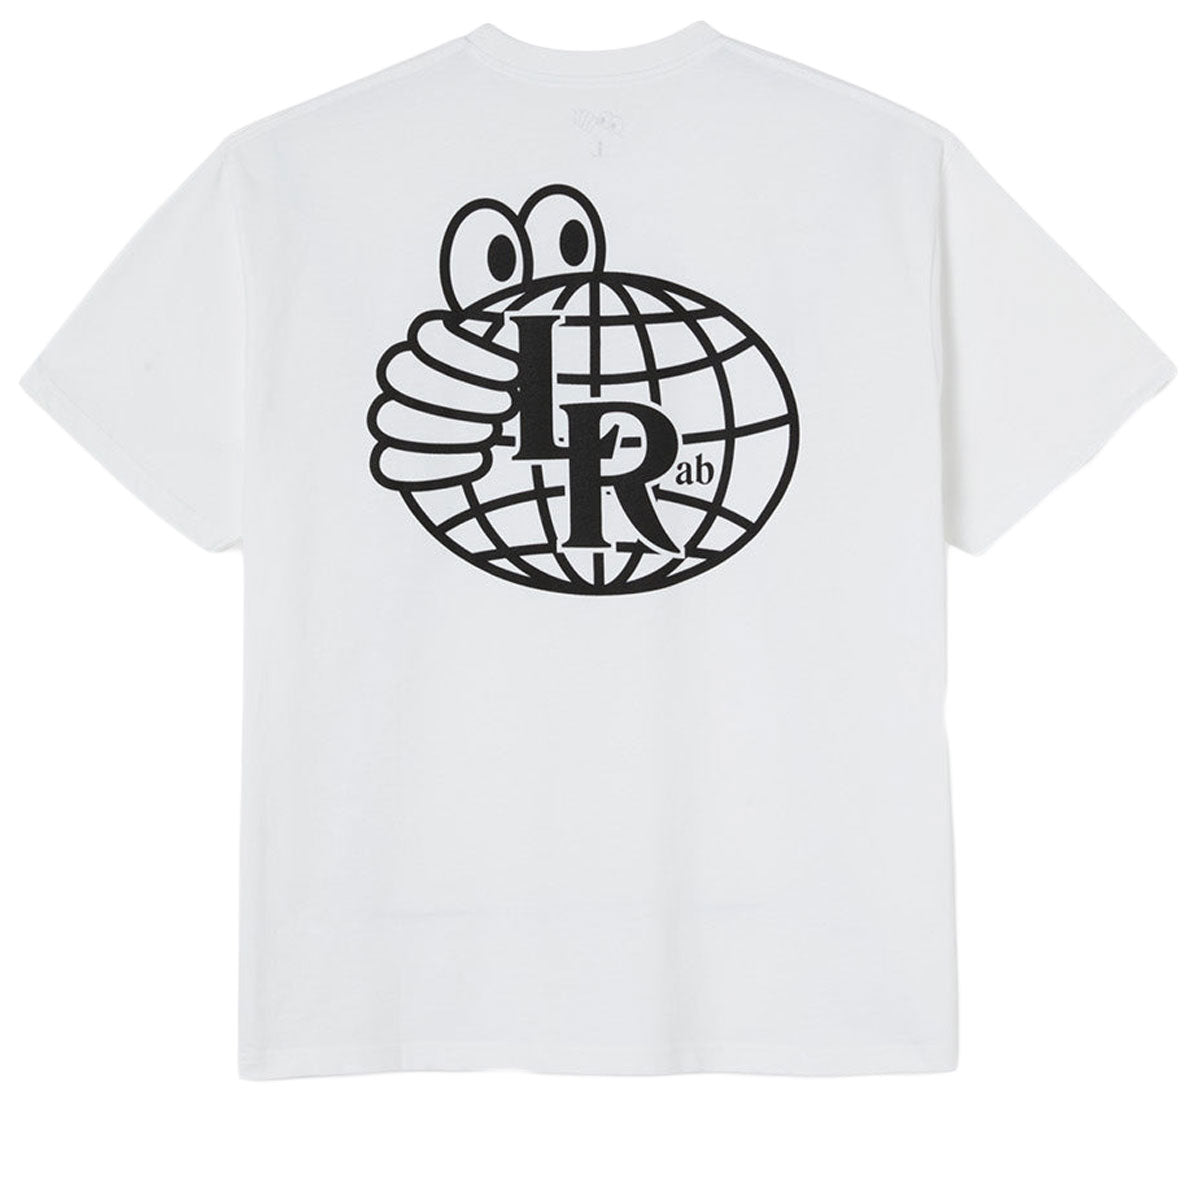 Last Resort AB Atlas Monogram T-Shirt - White/Black image 1